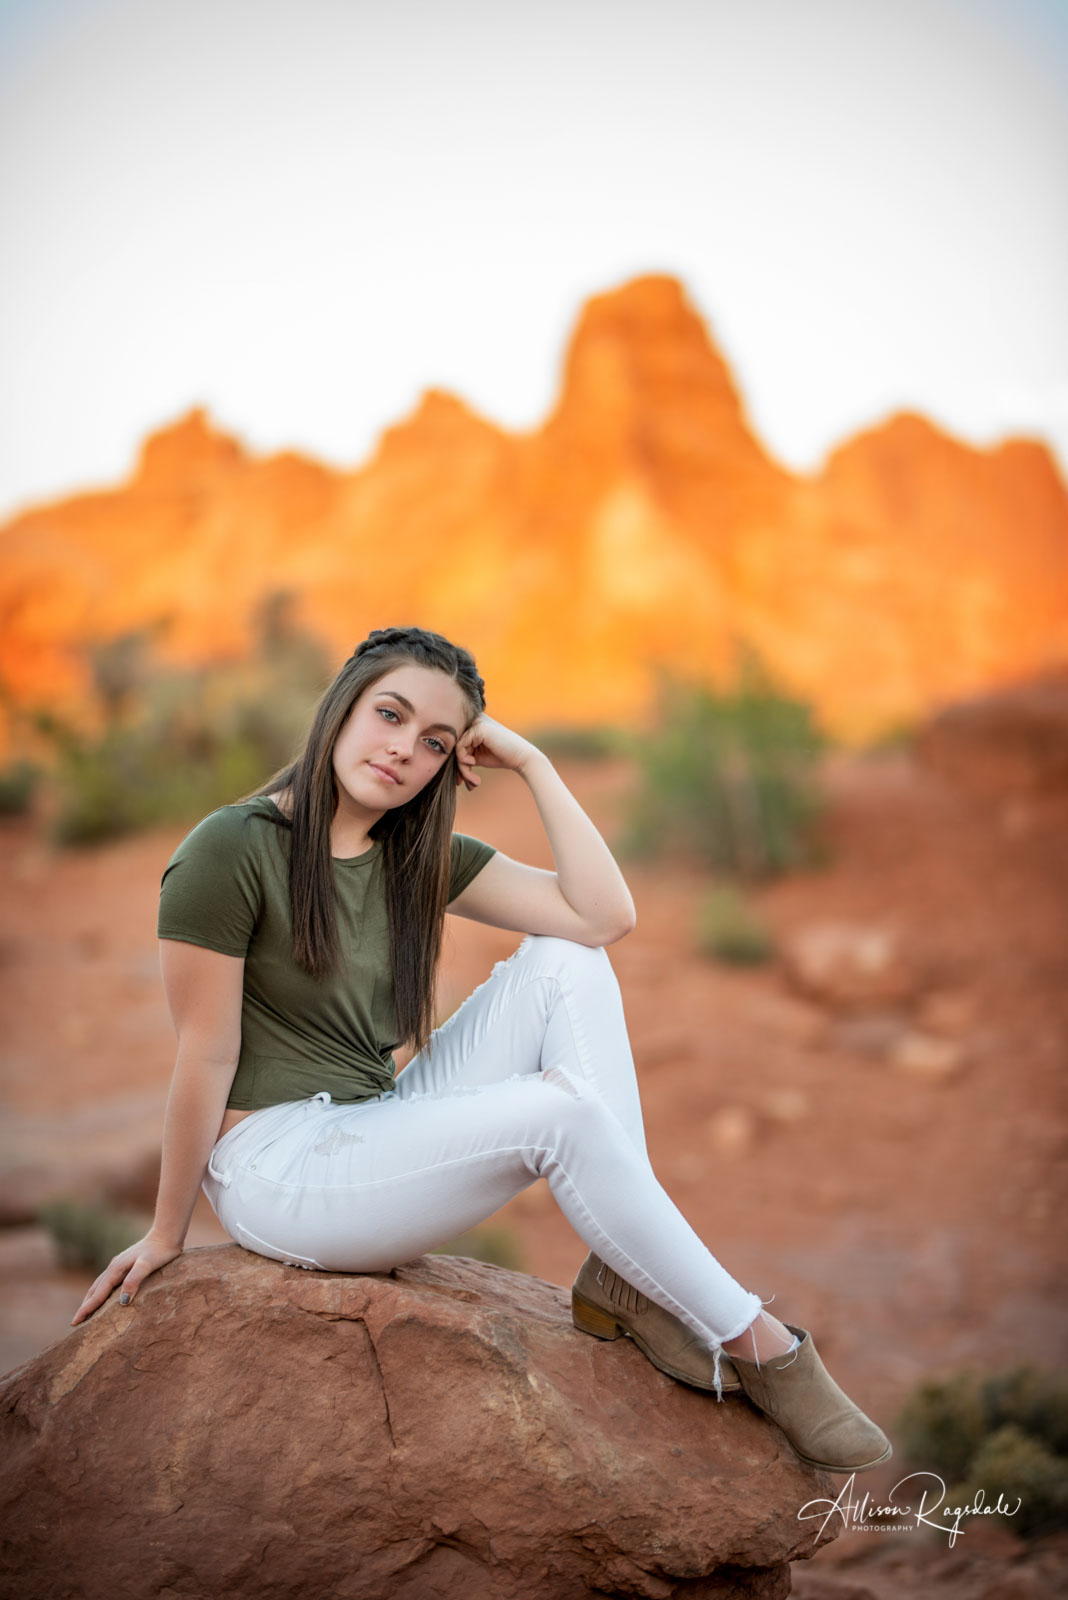 Allison Ragsdale Photography. Desert Senior Portraits 